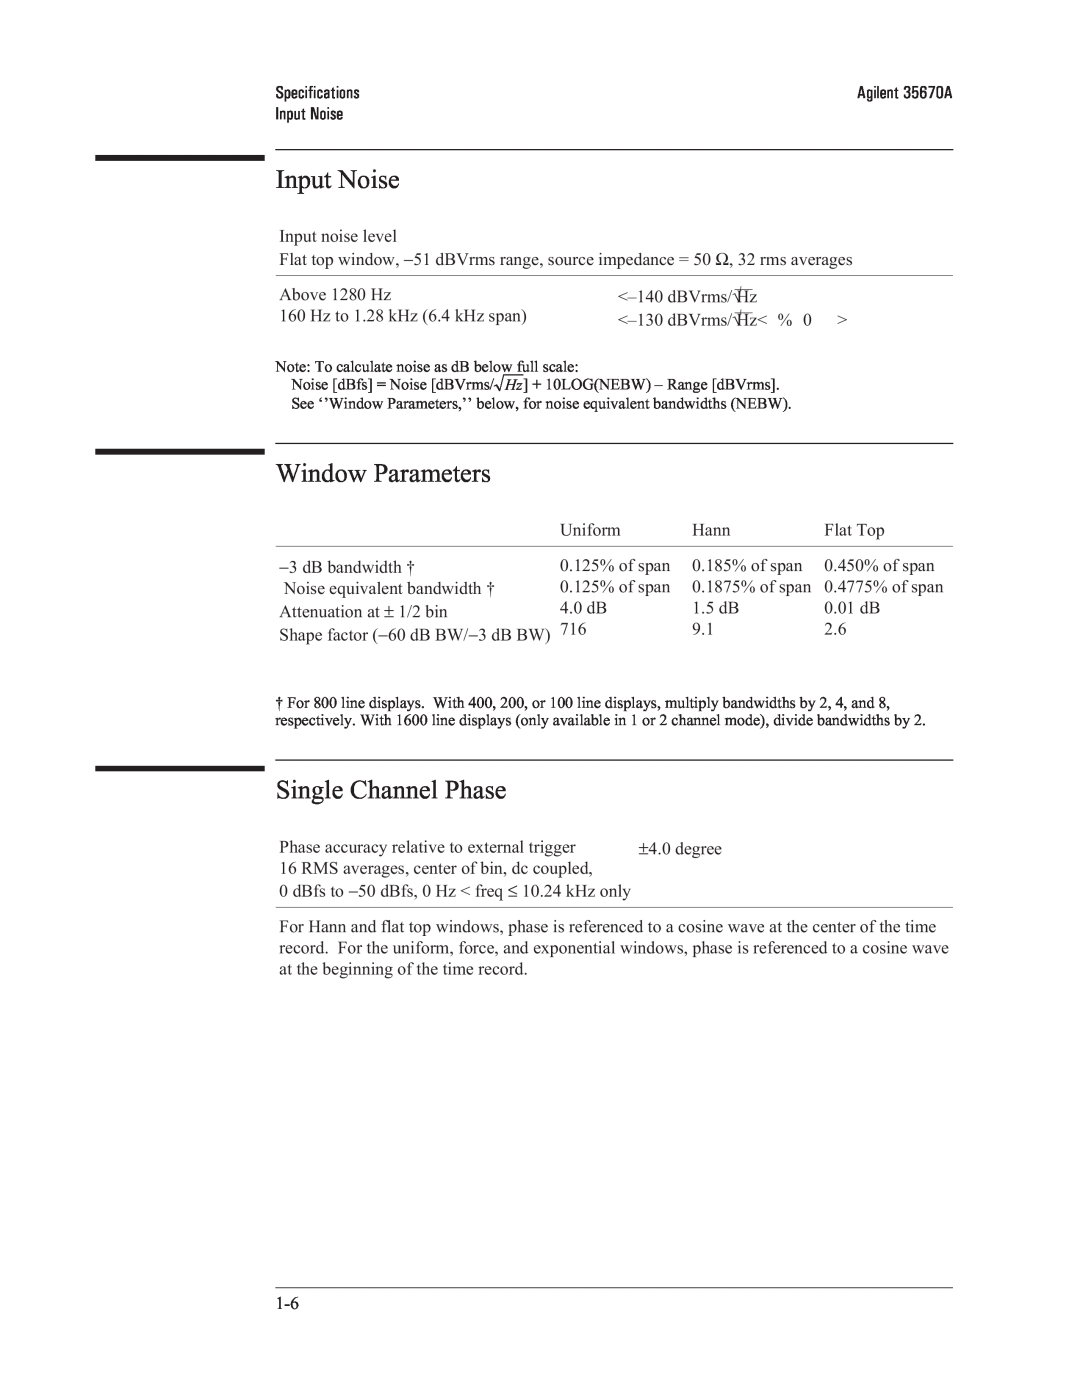 Agilent Technologies 35670-90066 manual Input Noise, Window Parameters, Single Channel Phase 